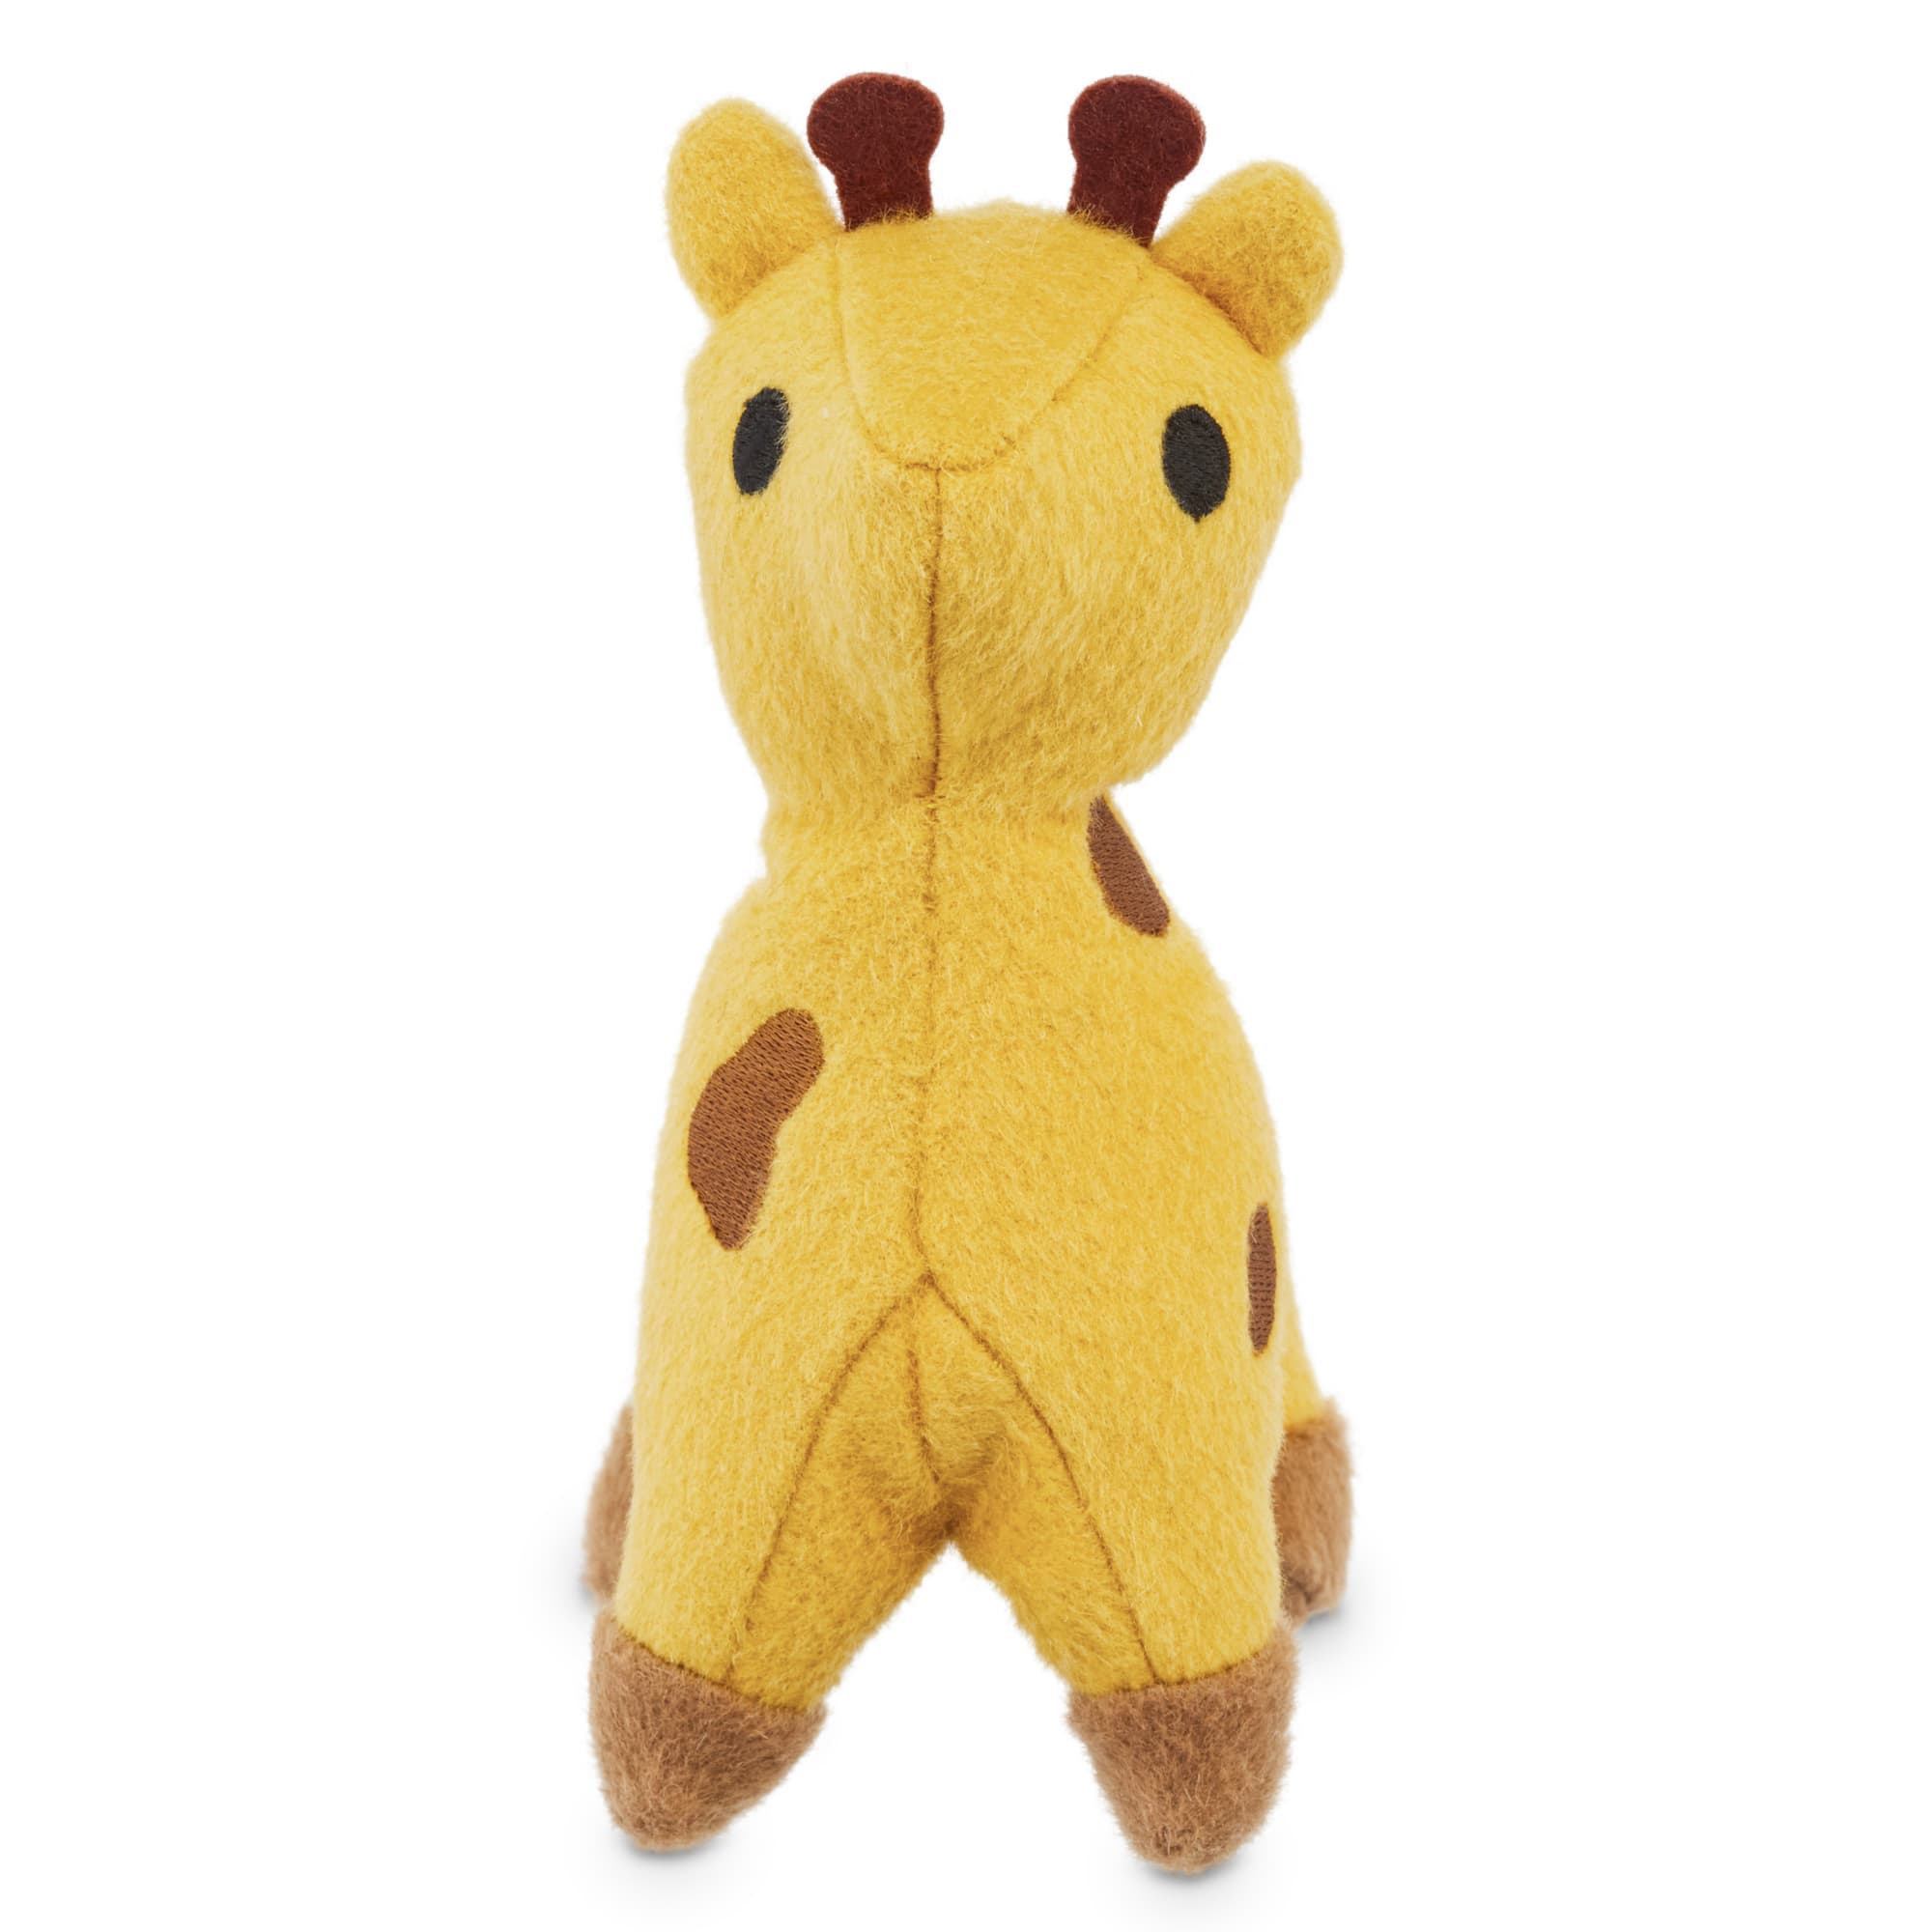 stuffed giraffe dog toy